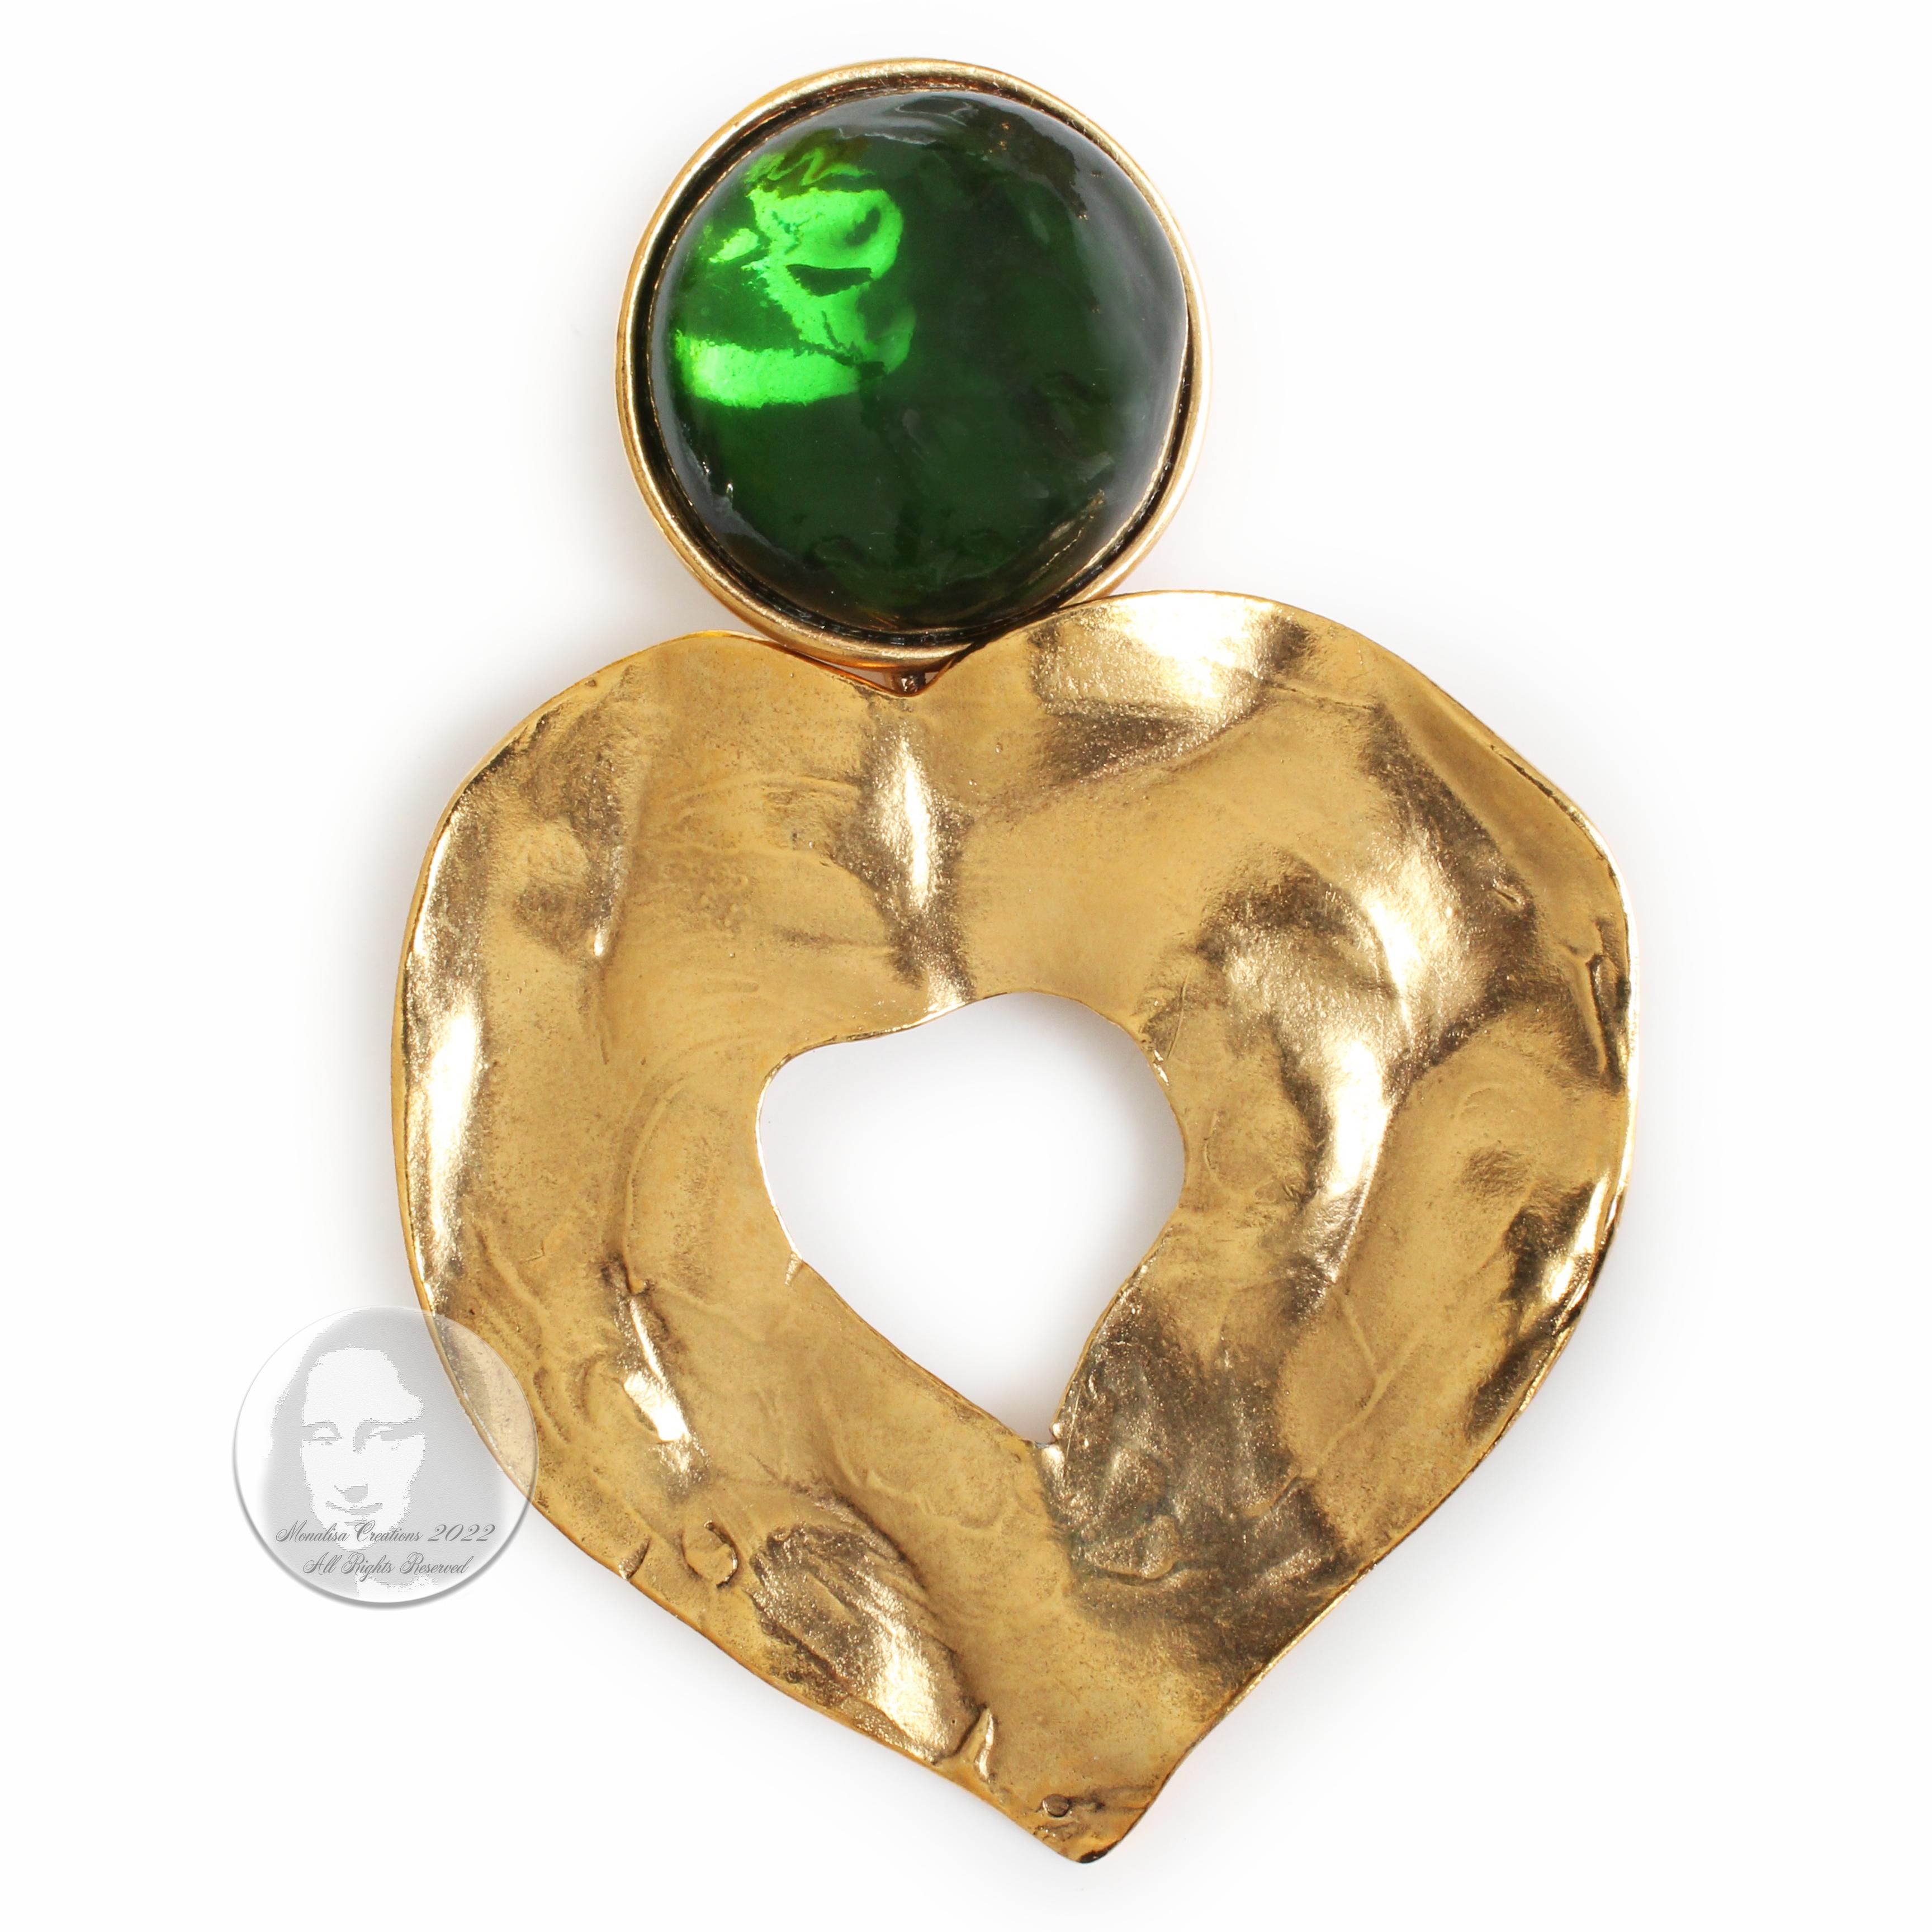 Women's Yves Saint Laurent Earrings Massive Gold Hearts Emerald Green Cabochons Vintage